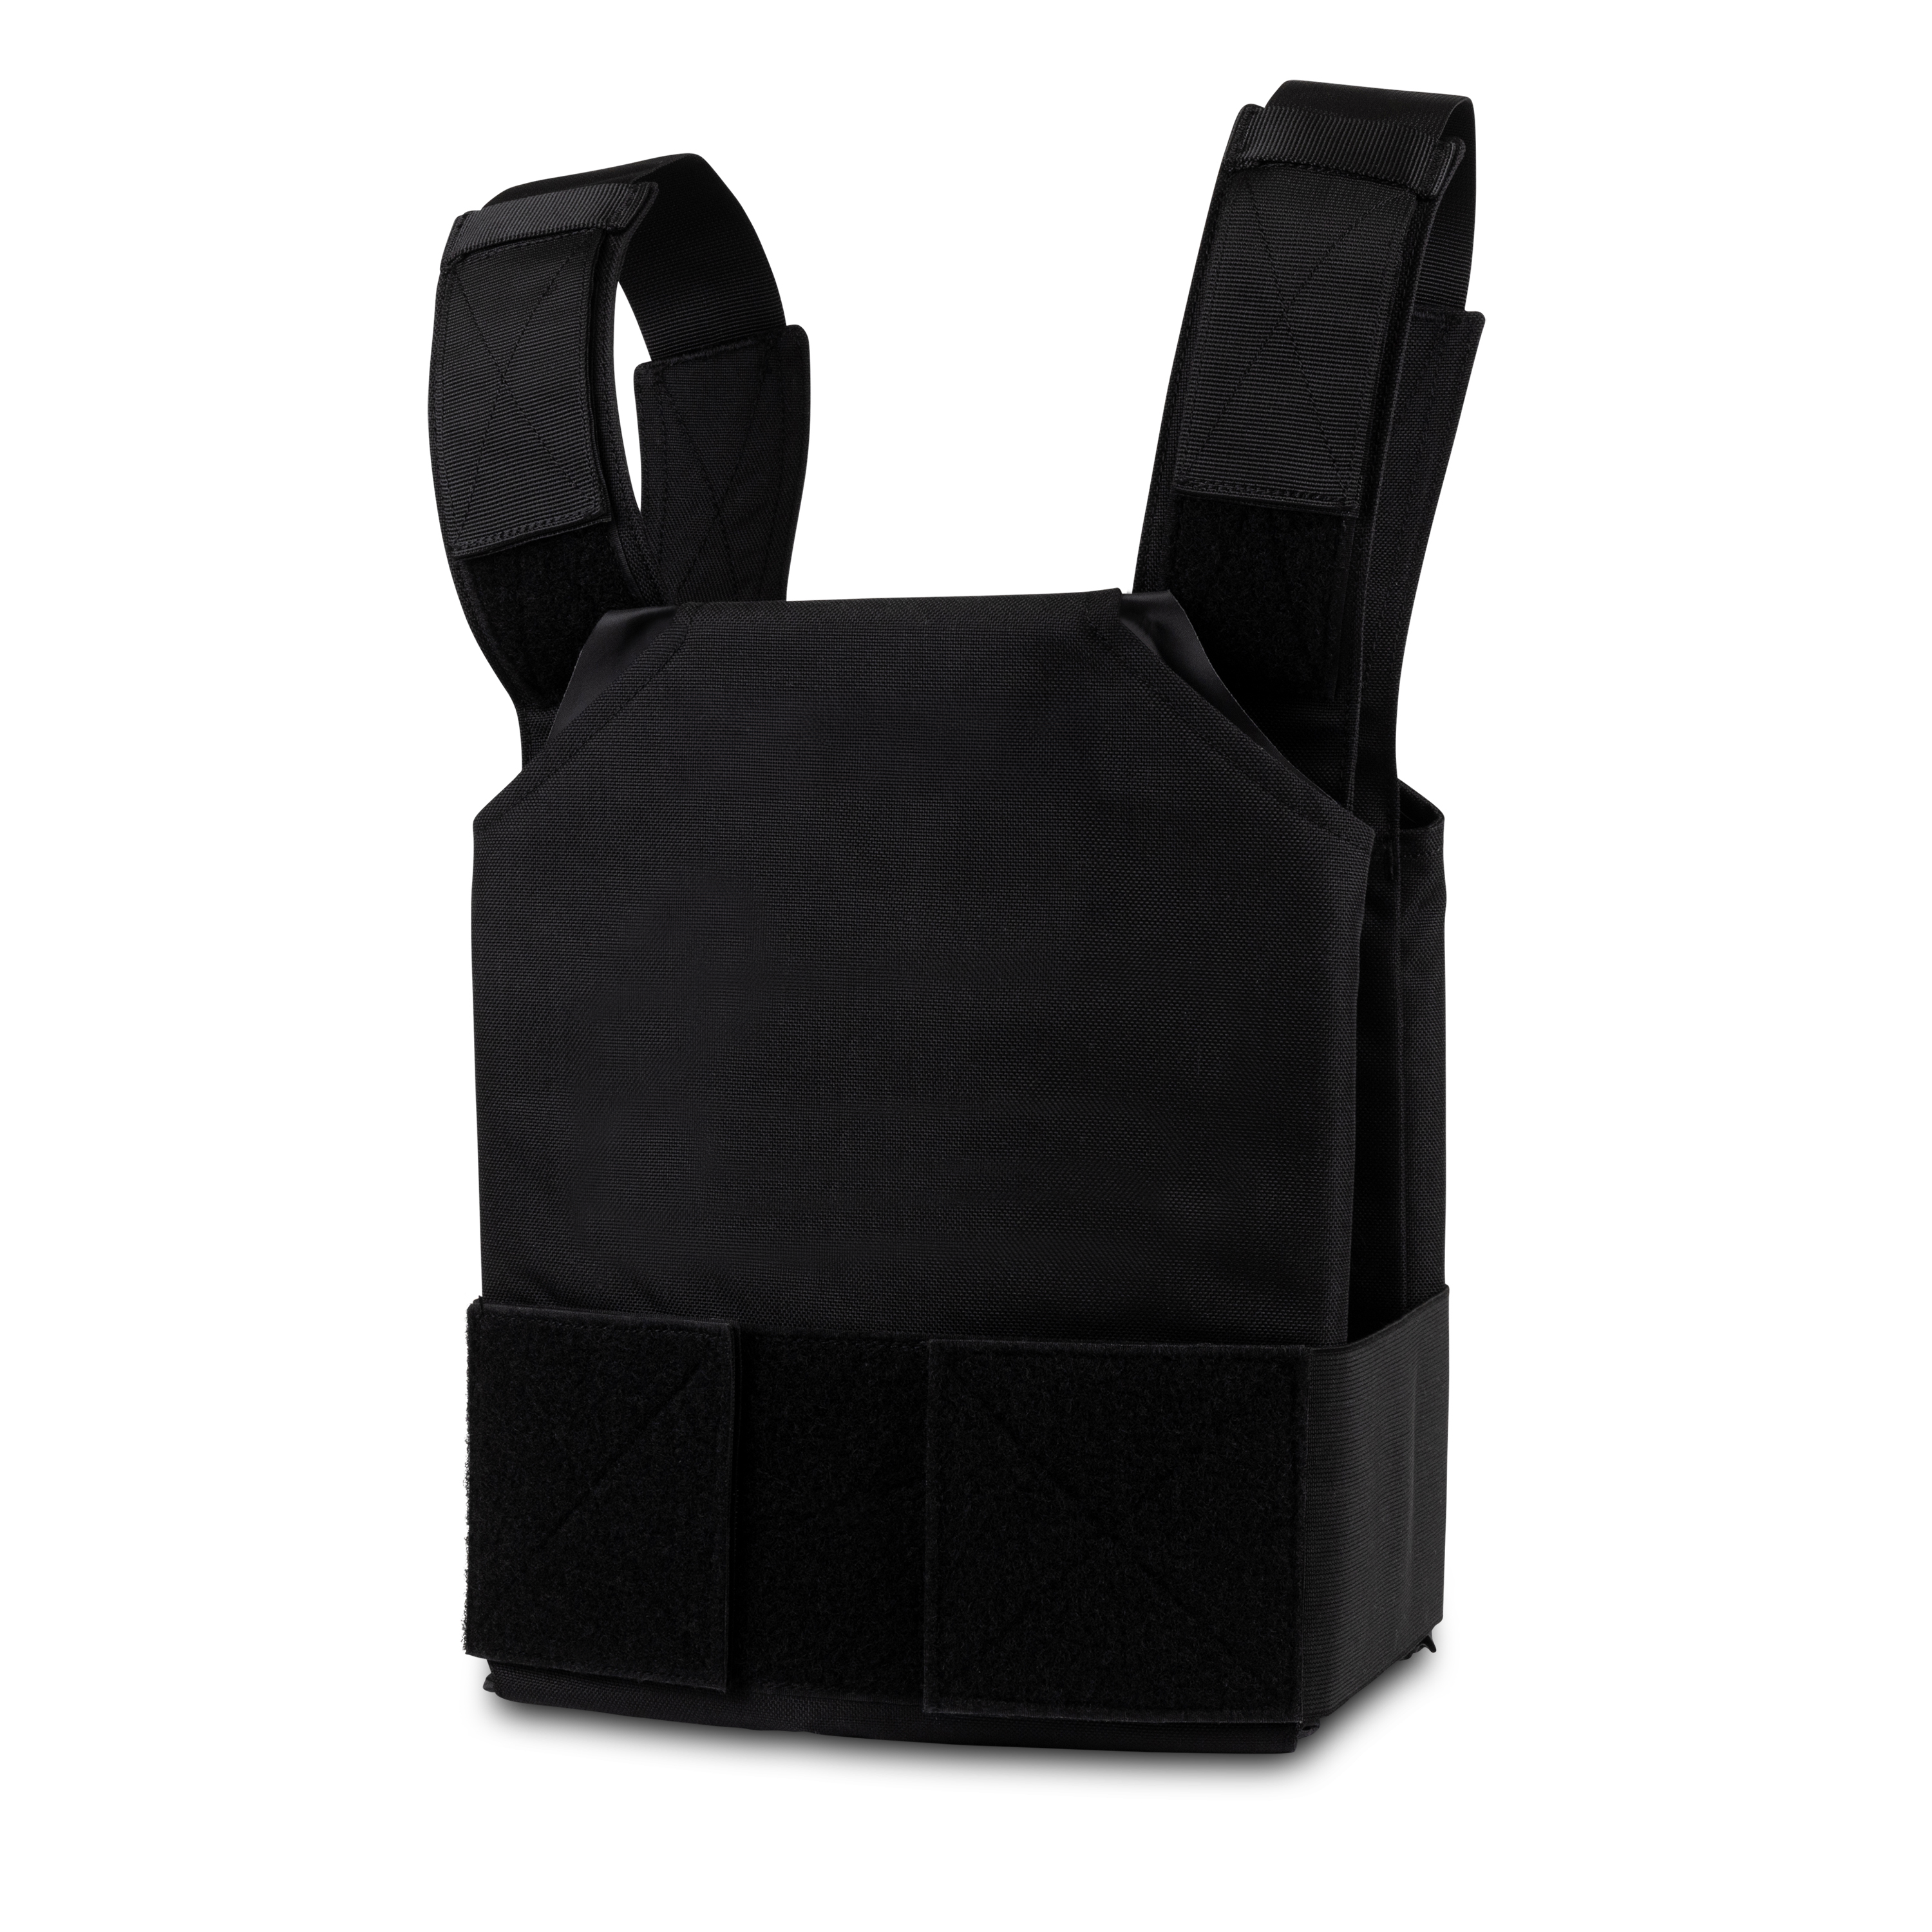 ProtectVest® Covert - Emergency Bulletproof Vest